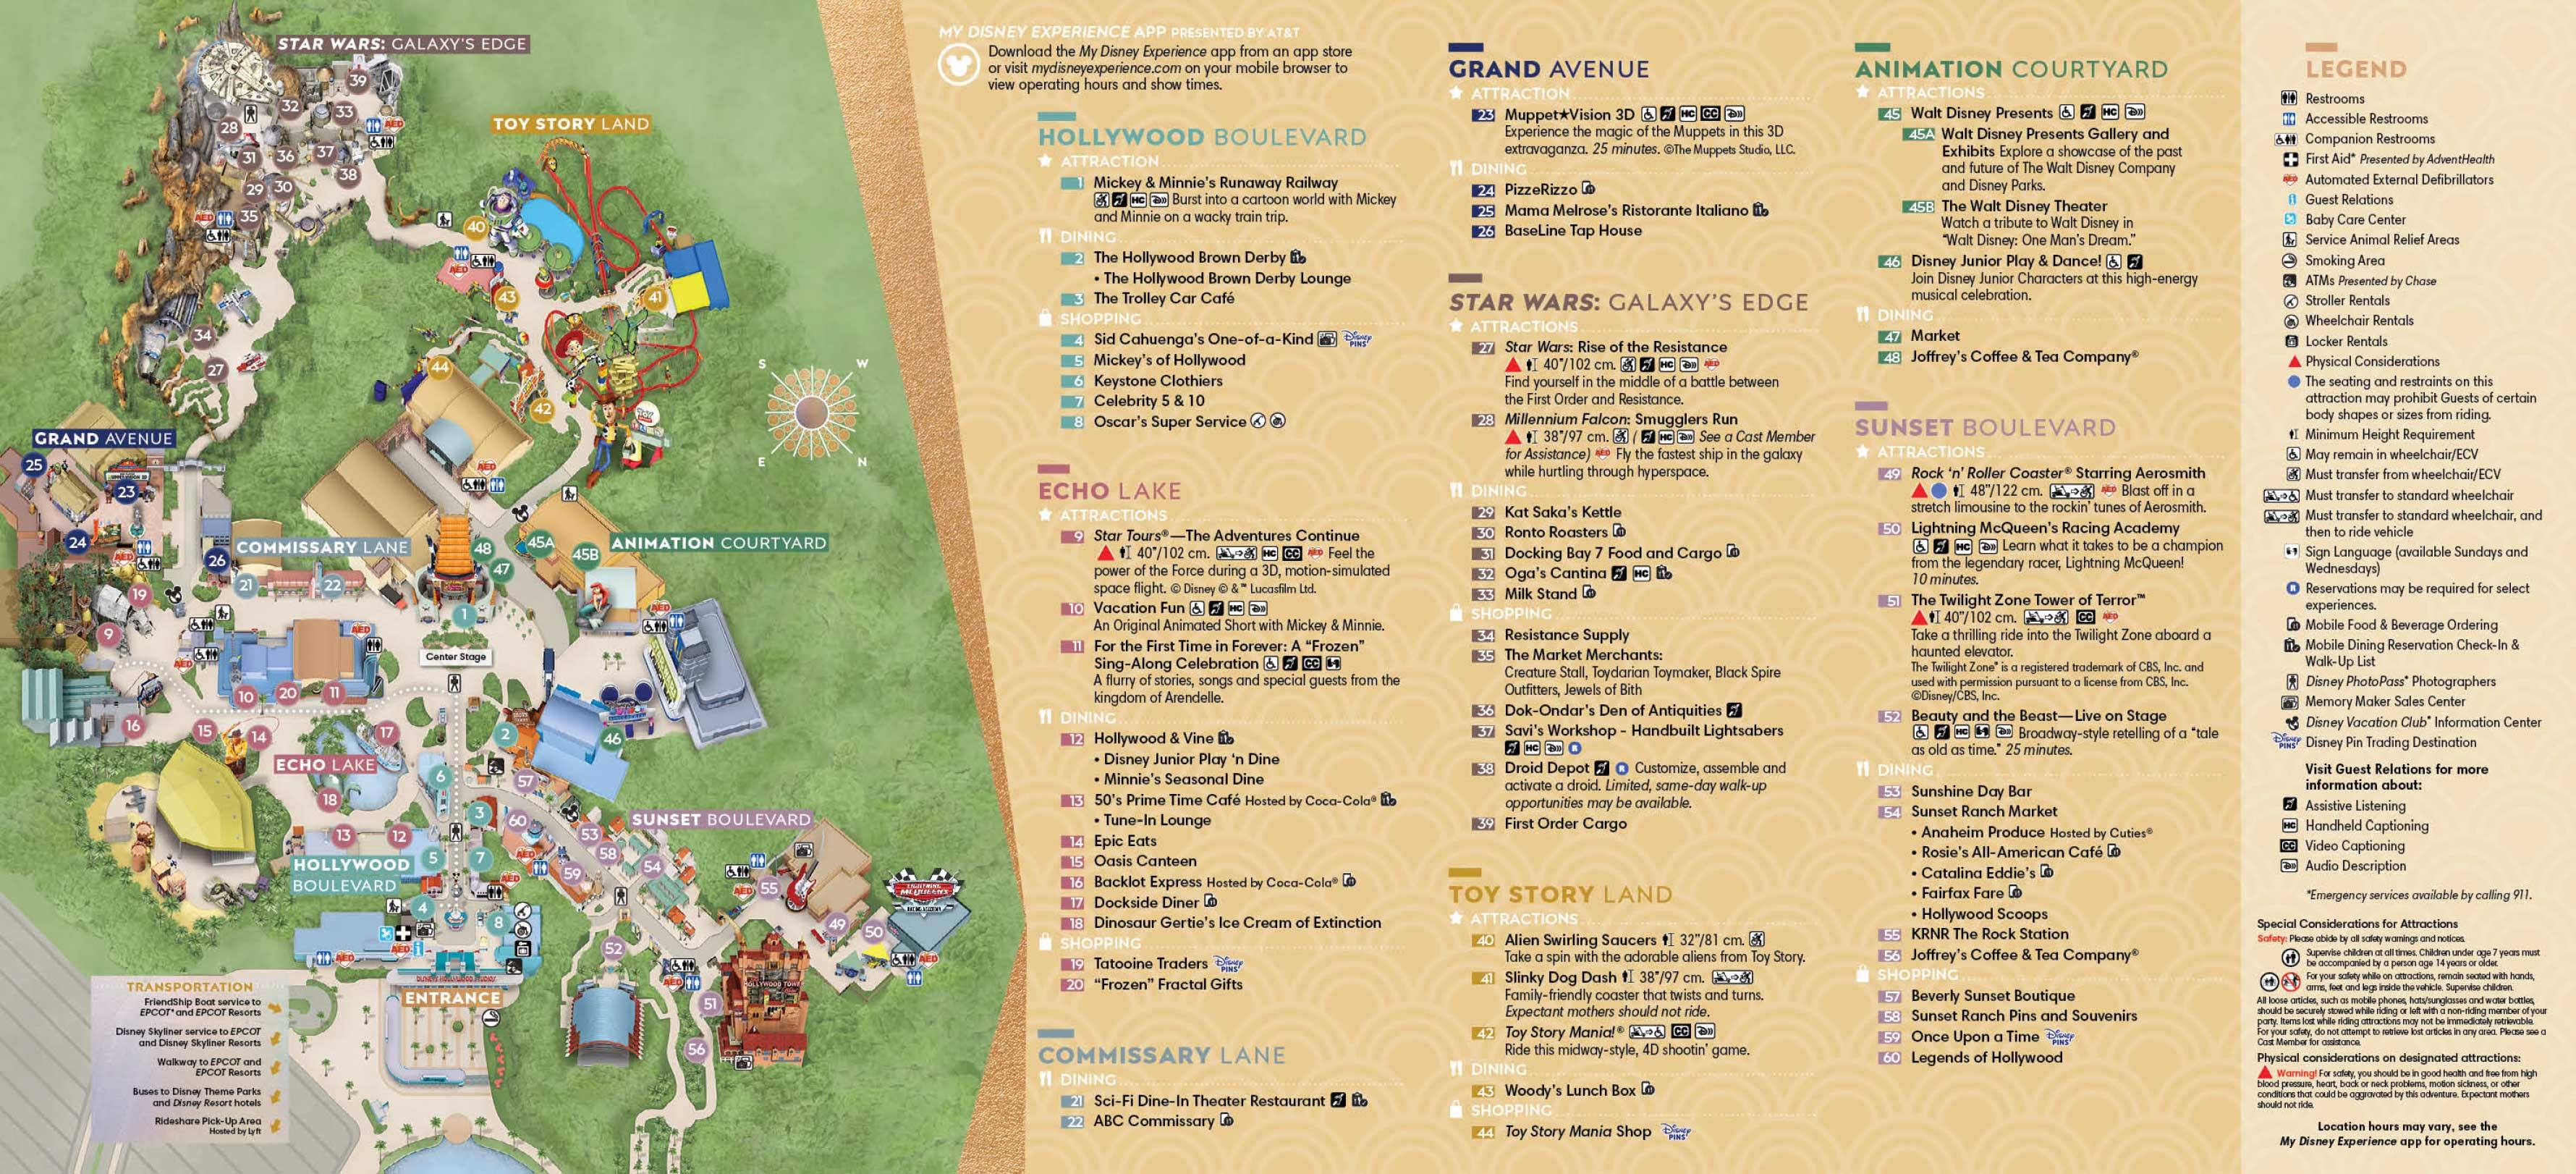 Walt Disney World 50th anniversary map - Disney's Hollywood Studios back